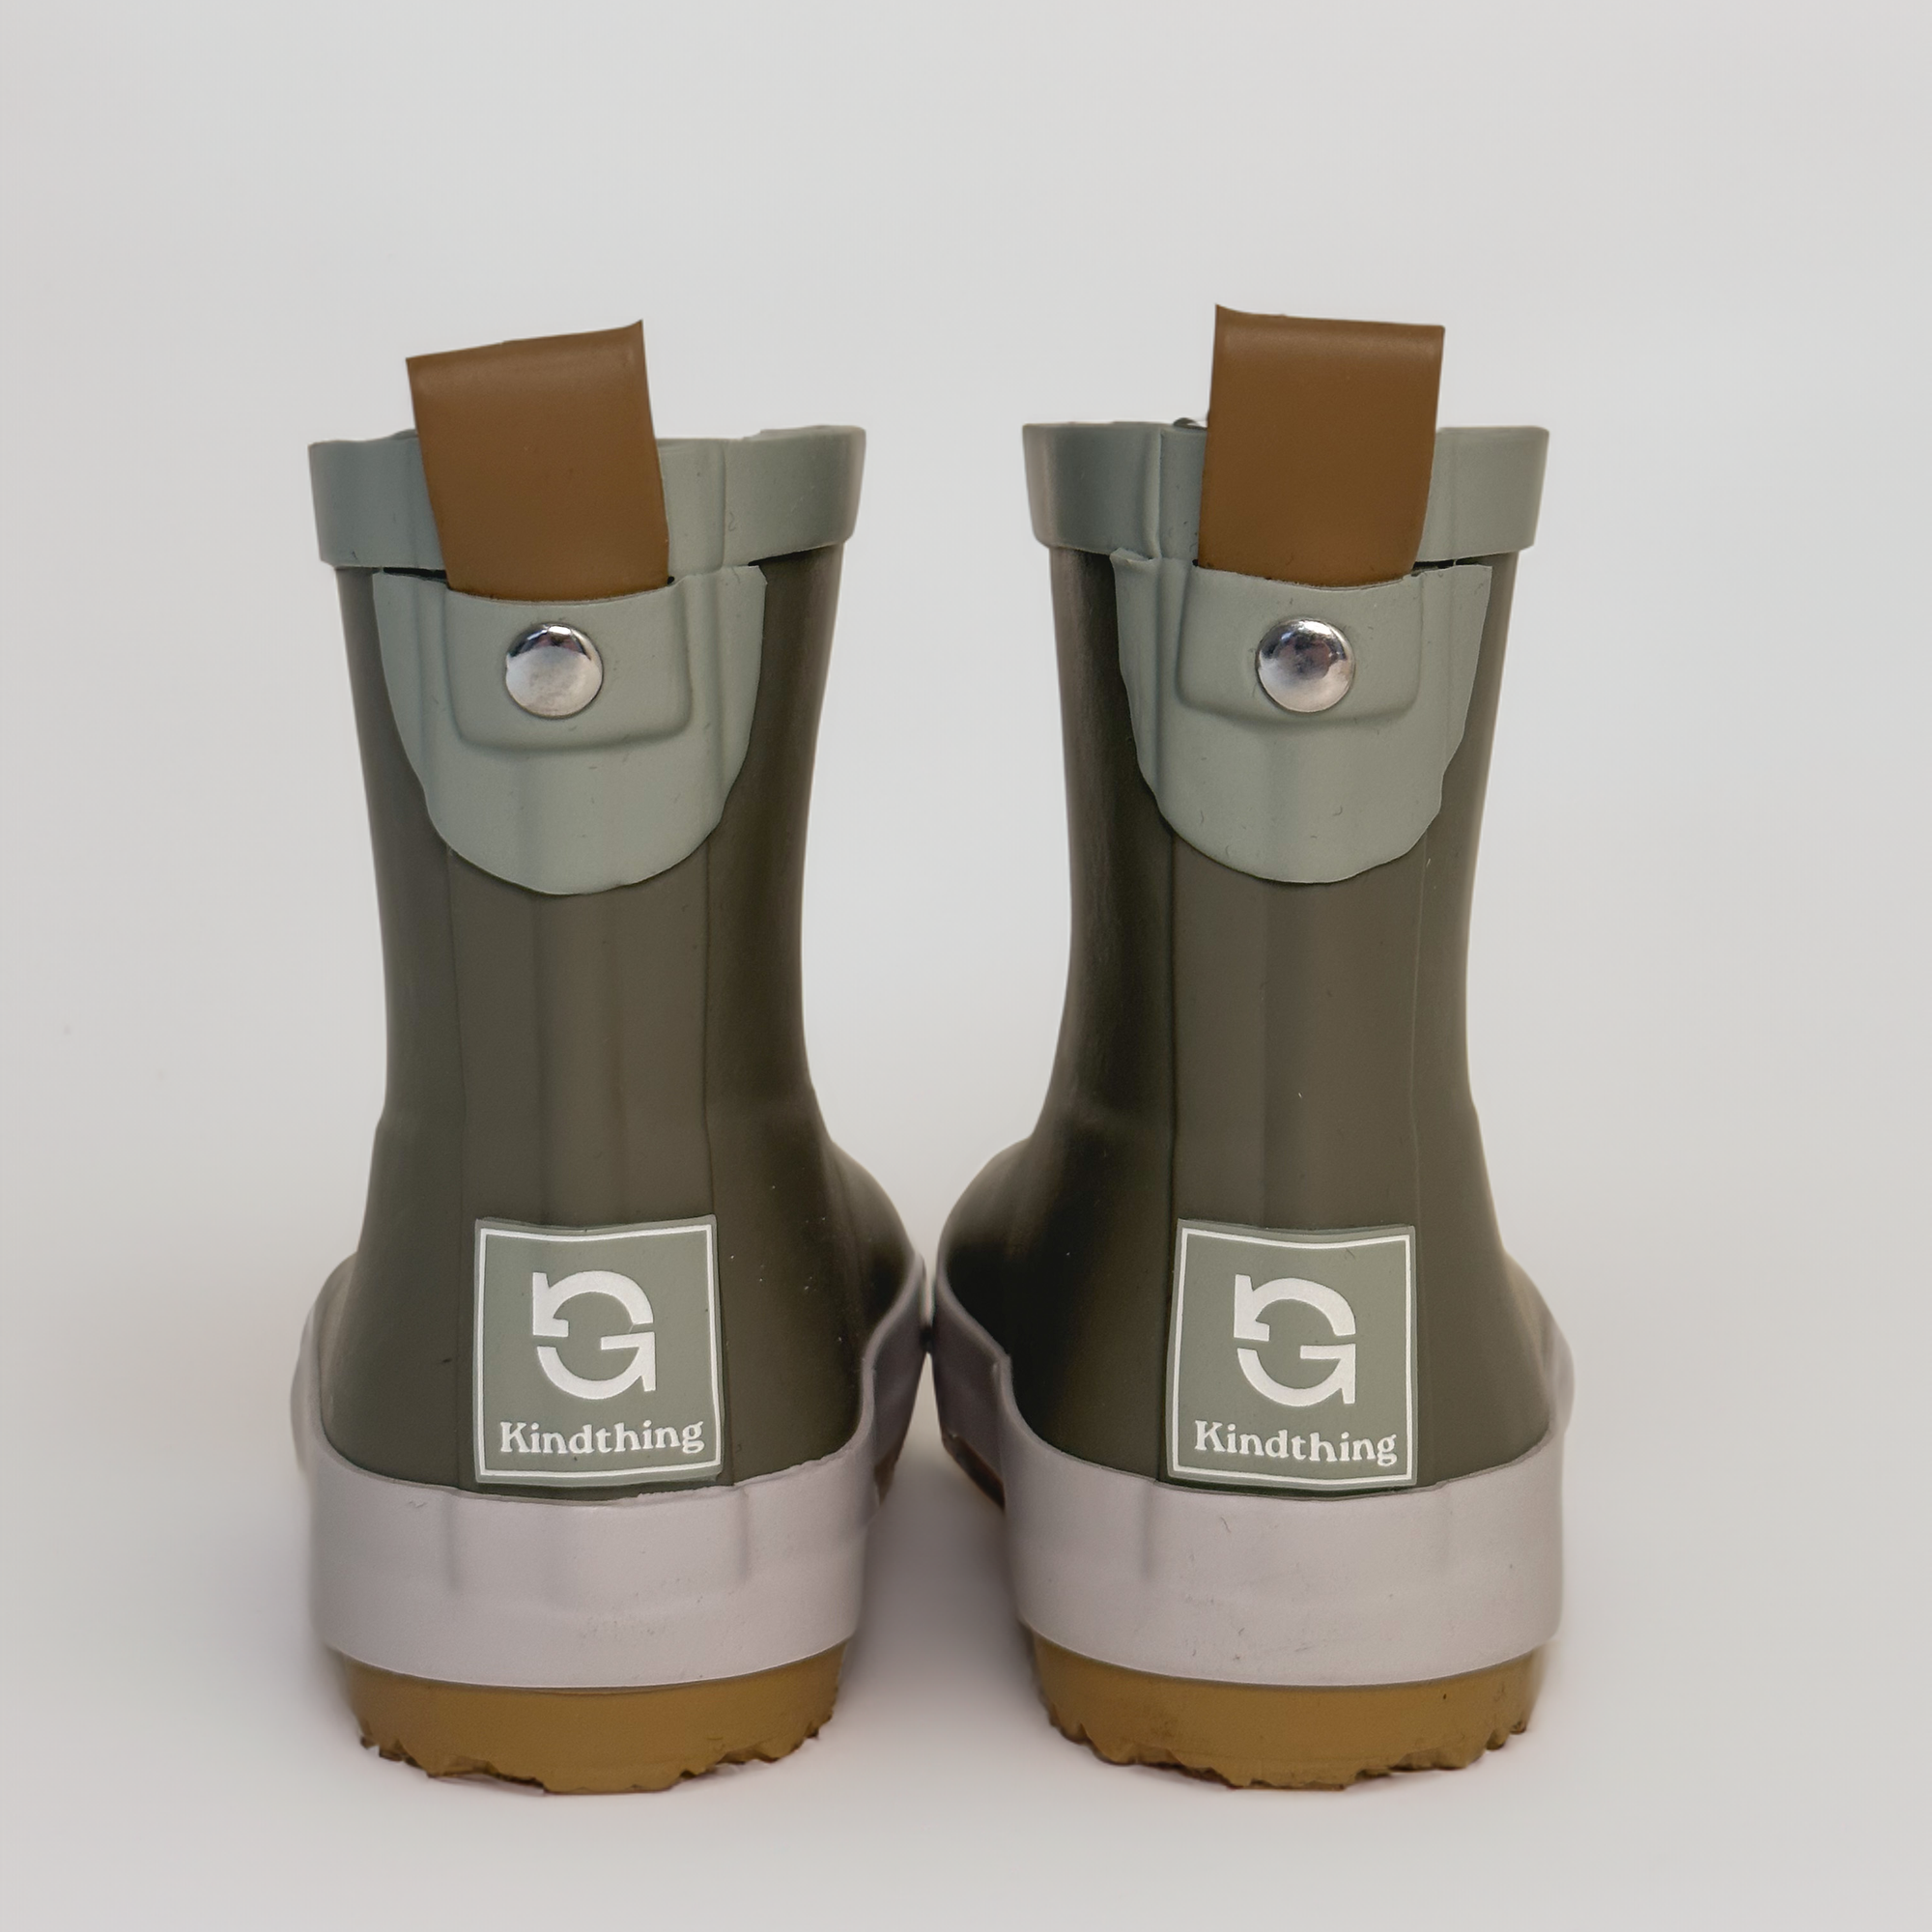 Puddlers Rain Boots